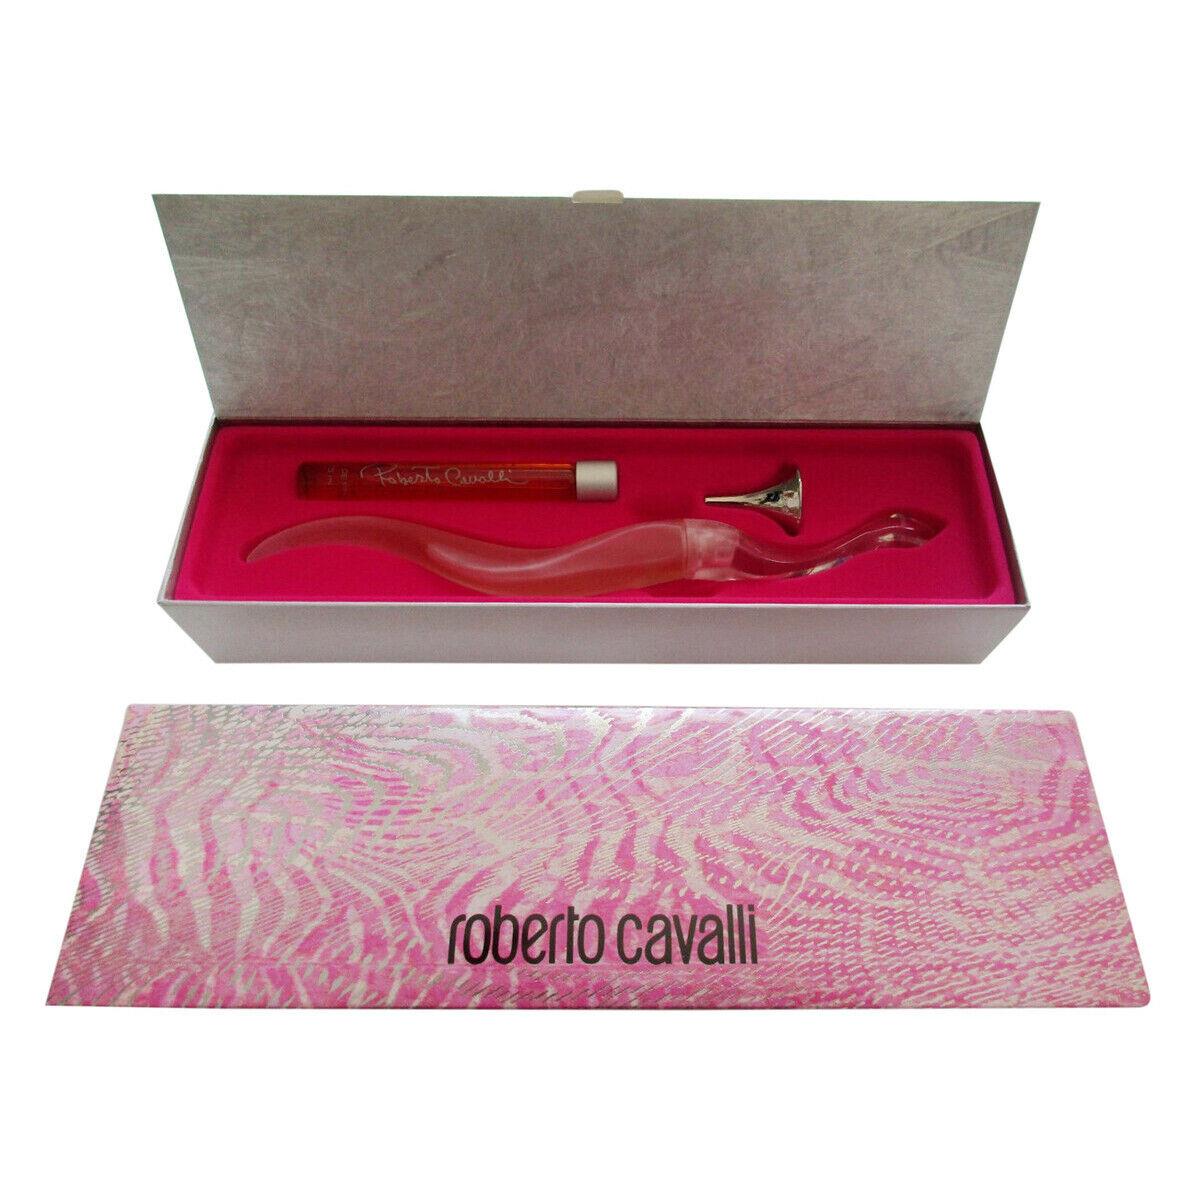 Roberto Cavalli 2 x 0.5 oz / 15 ml Eau De Parfum Spray and Refill For Women